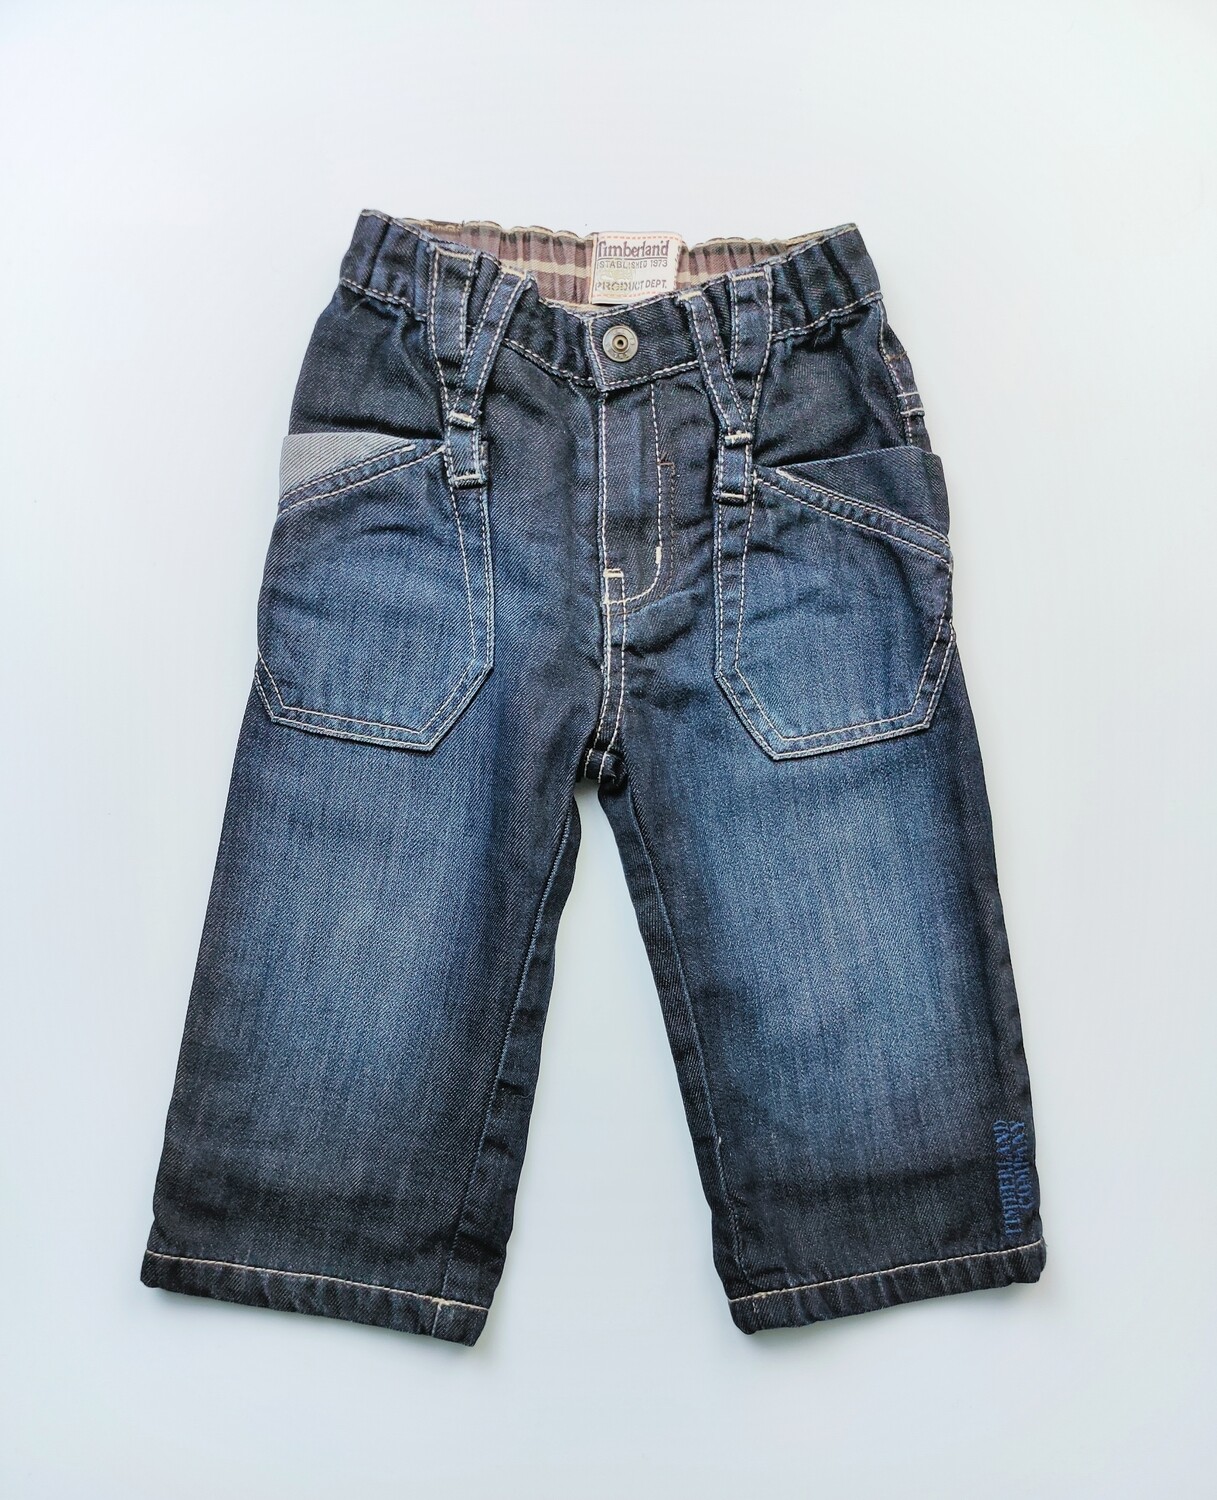 Pantalon JEAN Timberland Bleu - Taille 12 mois